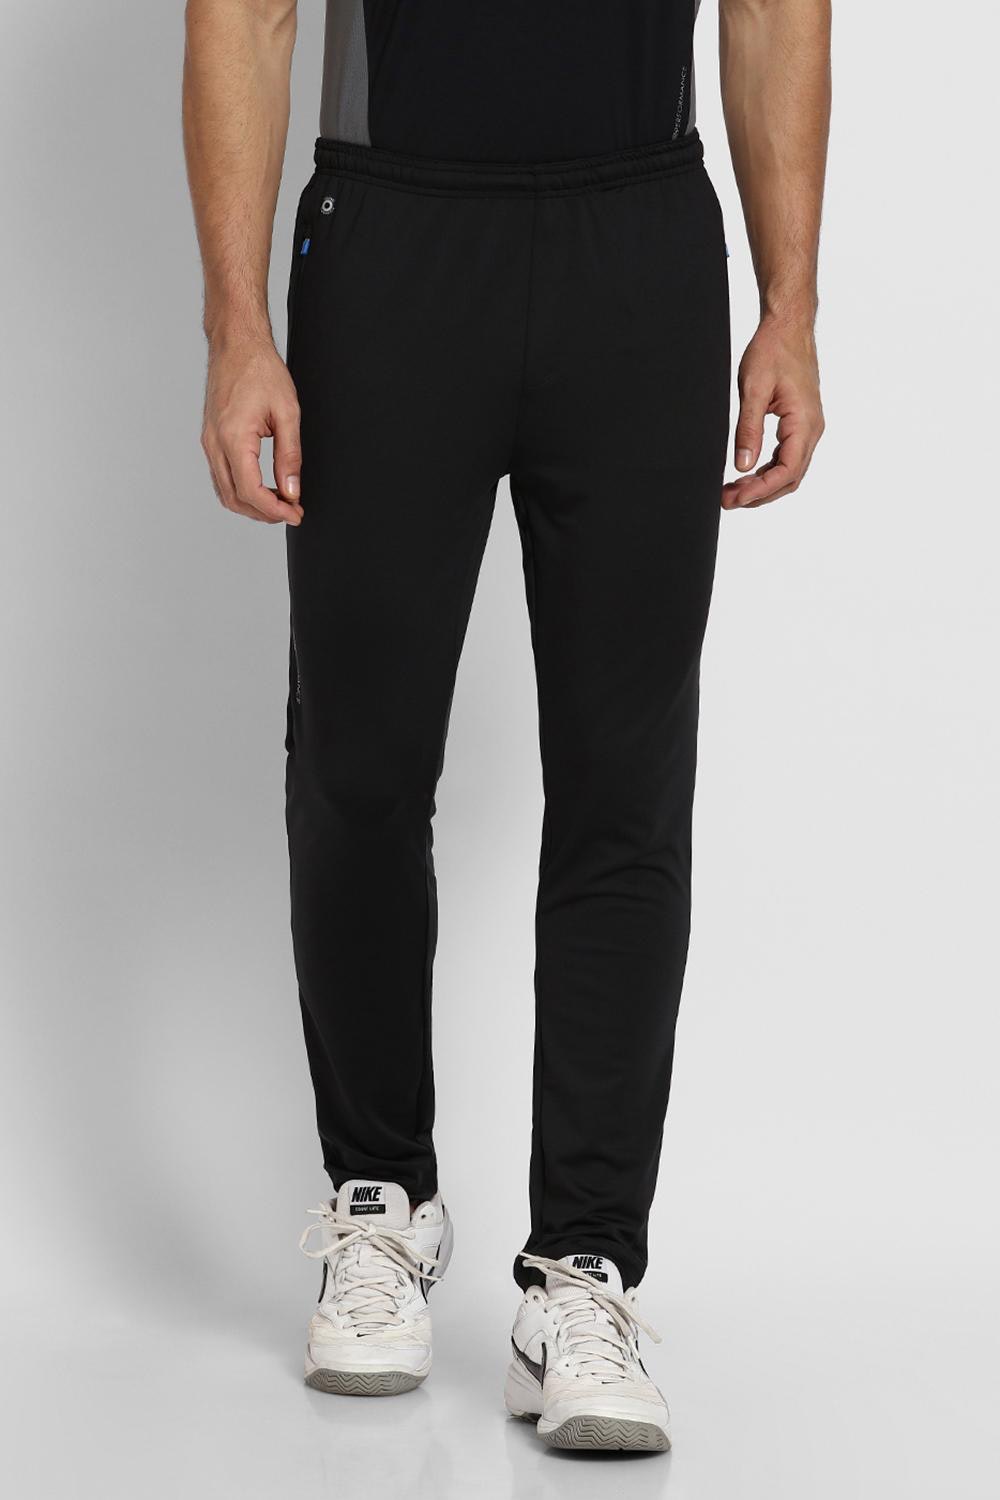 Black Nike Reflective Thermal Track Pants (sz. XL)